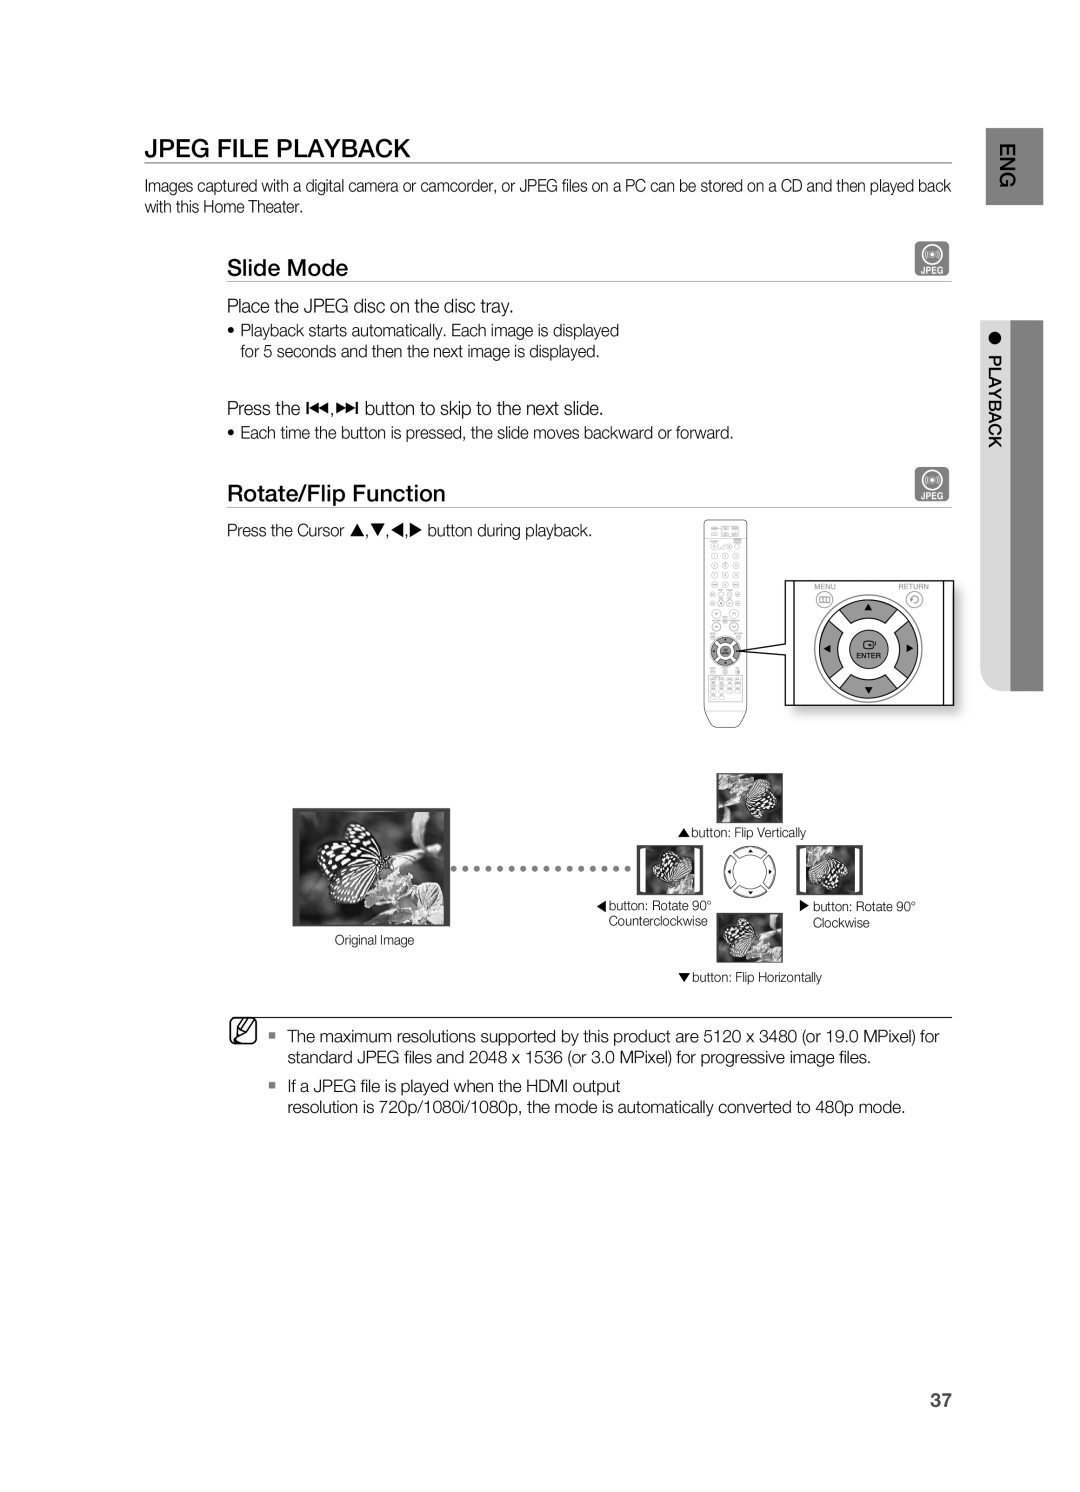 Samsung HT-Z510 manual JPEg FILE PLAYBACK, Slide Mode, rotate/Flip Function 